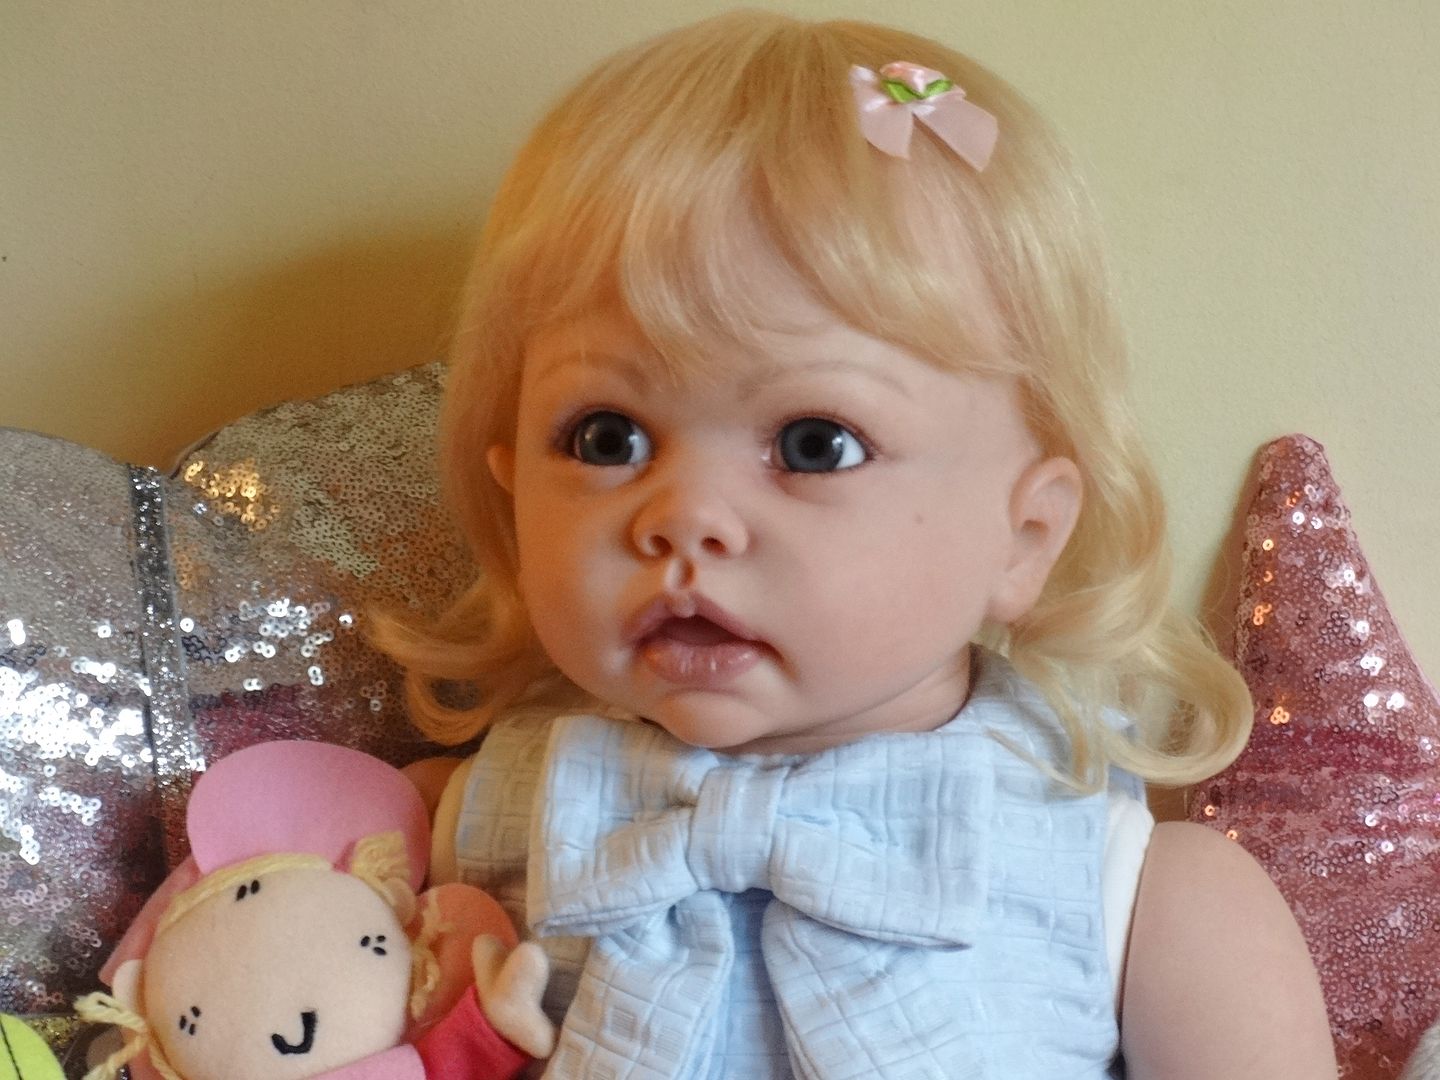 CUSTOM MADE REBORN TODDLER BABY GIRL TIPPI BY LINDA MURRAY! | eBay